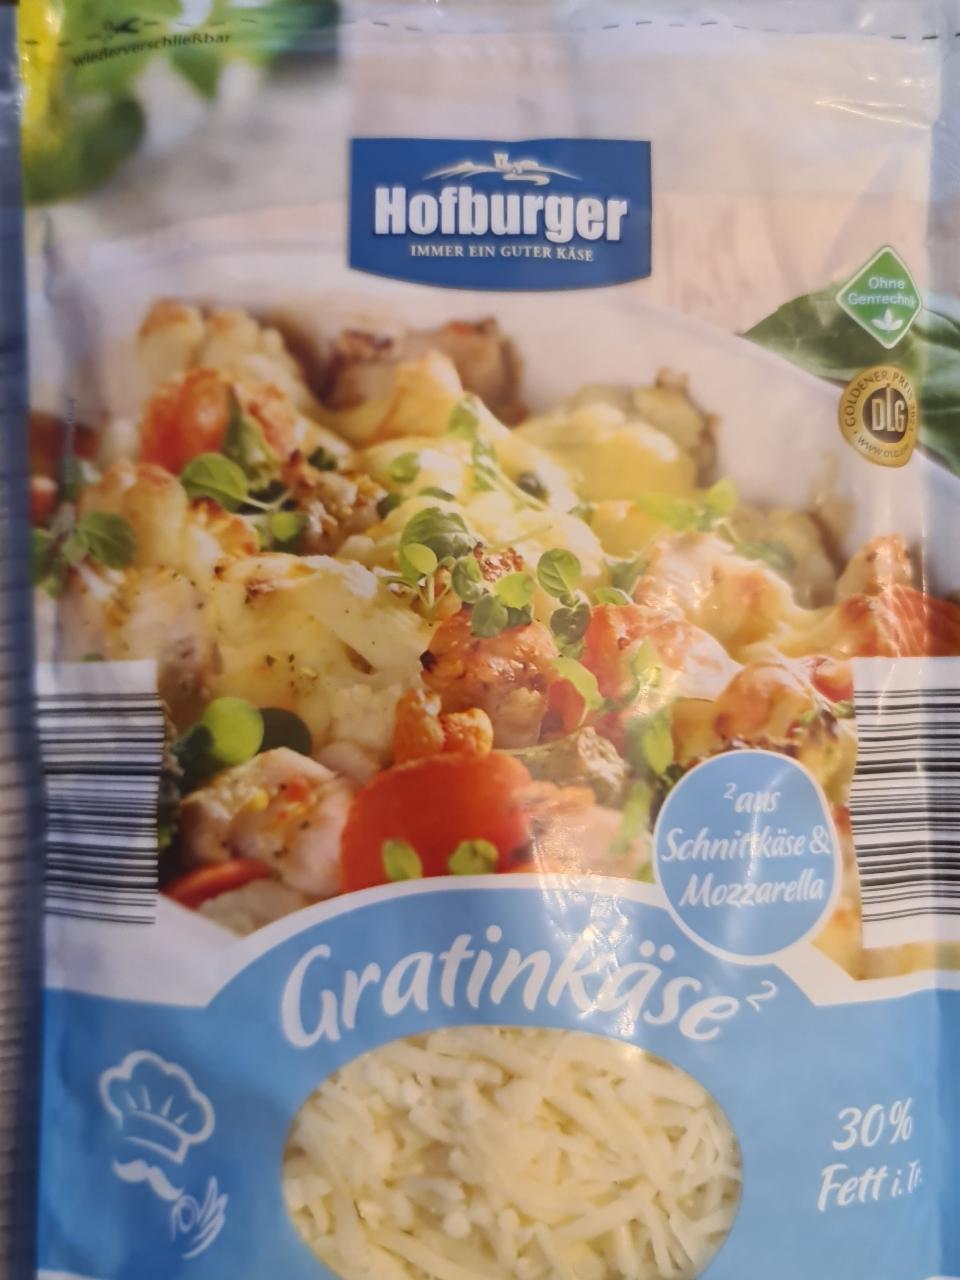 Фото - Gratinkäse 30% Hofburger